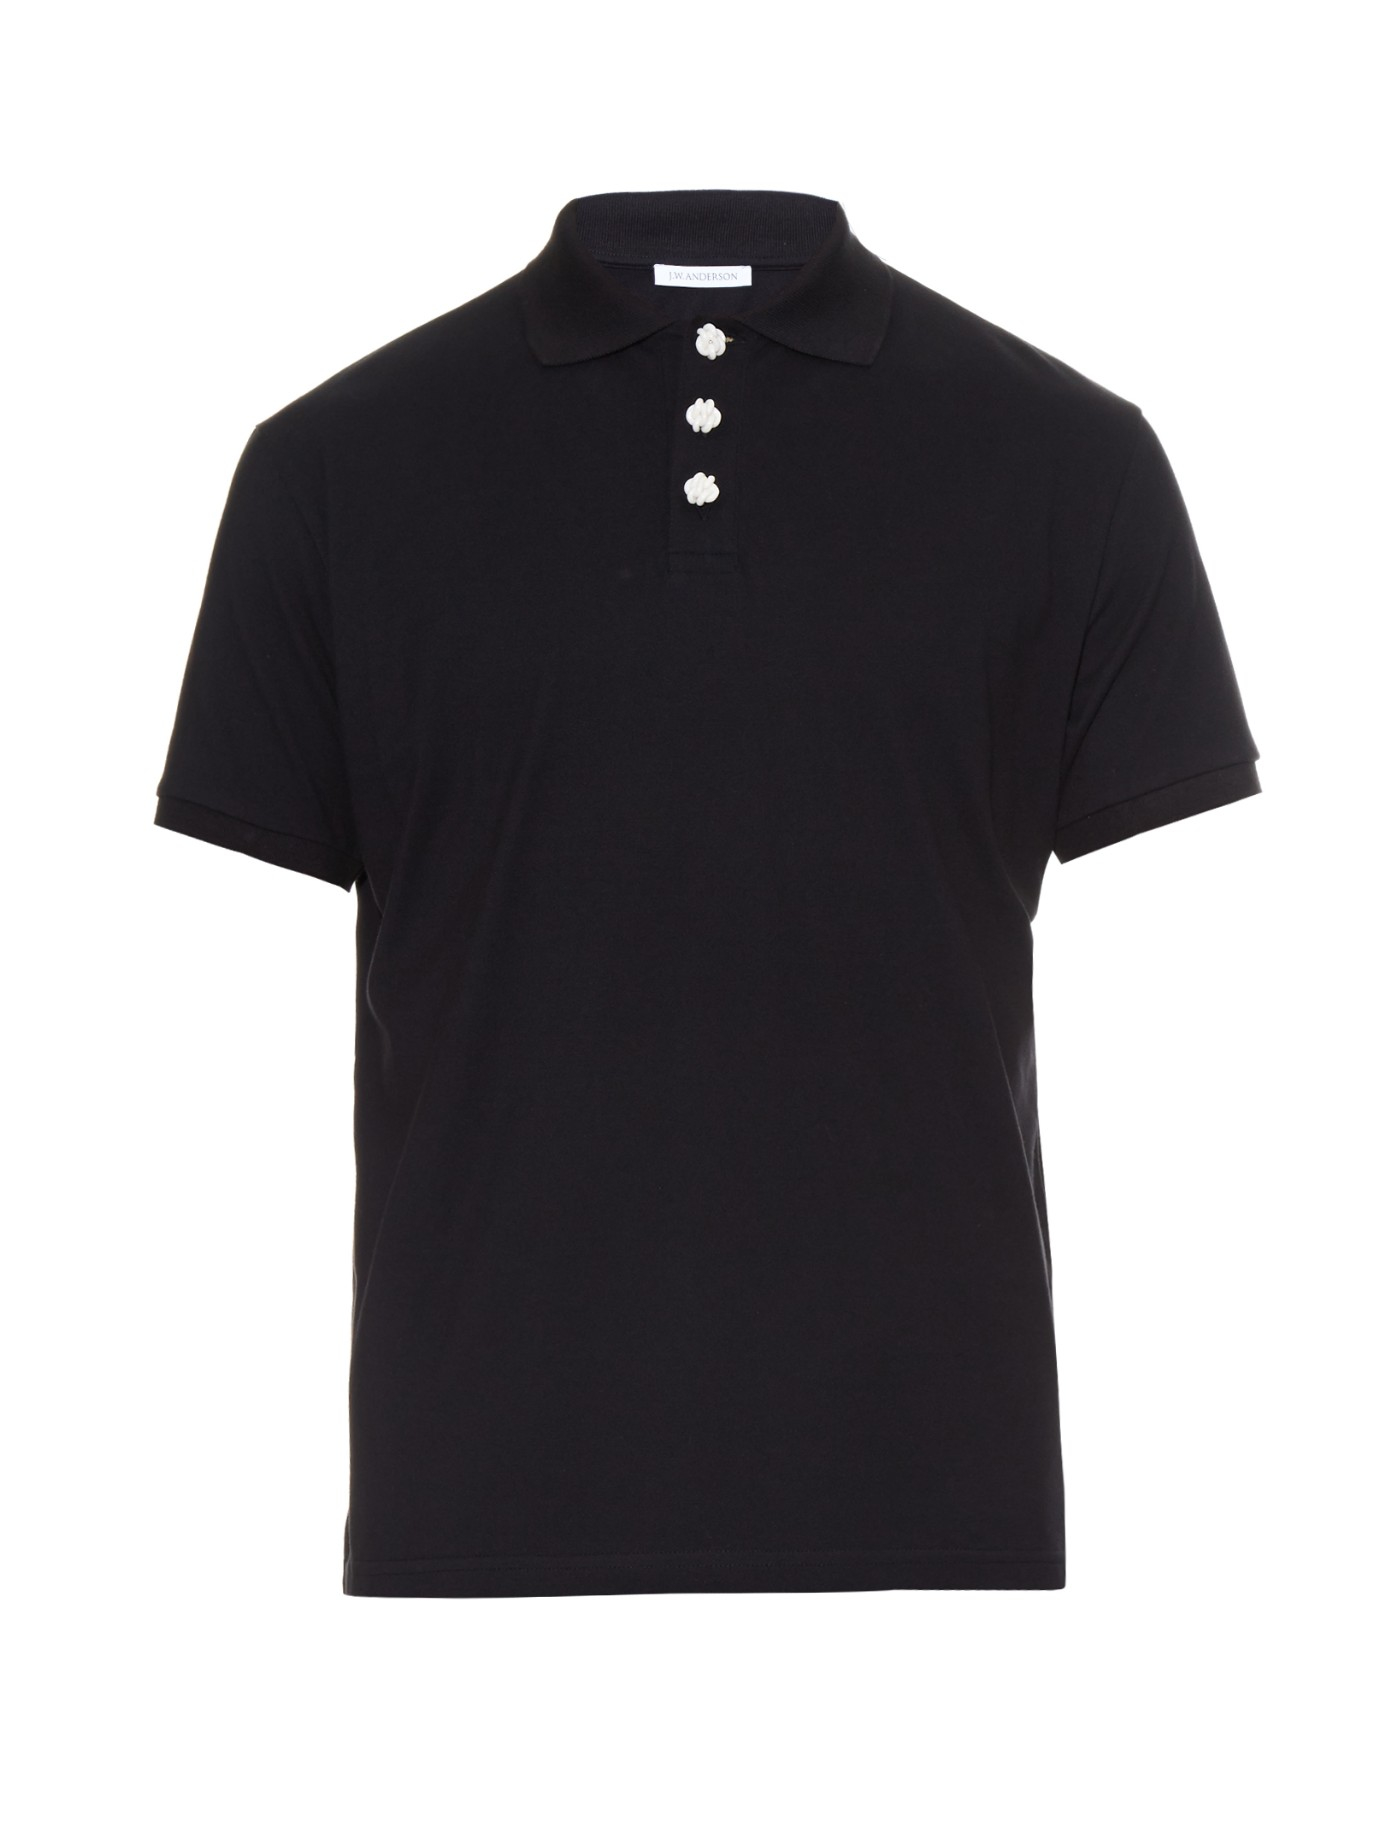 J.w.anderson Knot-Button Cotton-Piqué Polo Shirt in Black for Men | Lyst